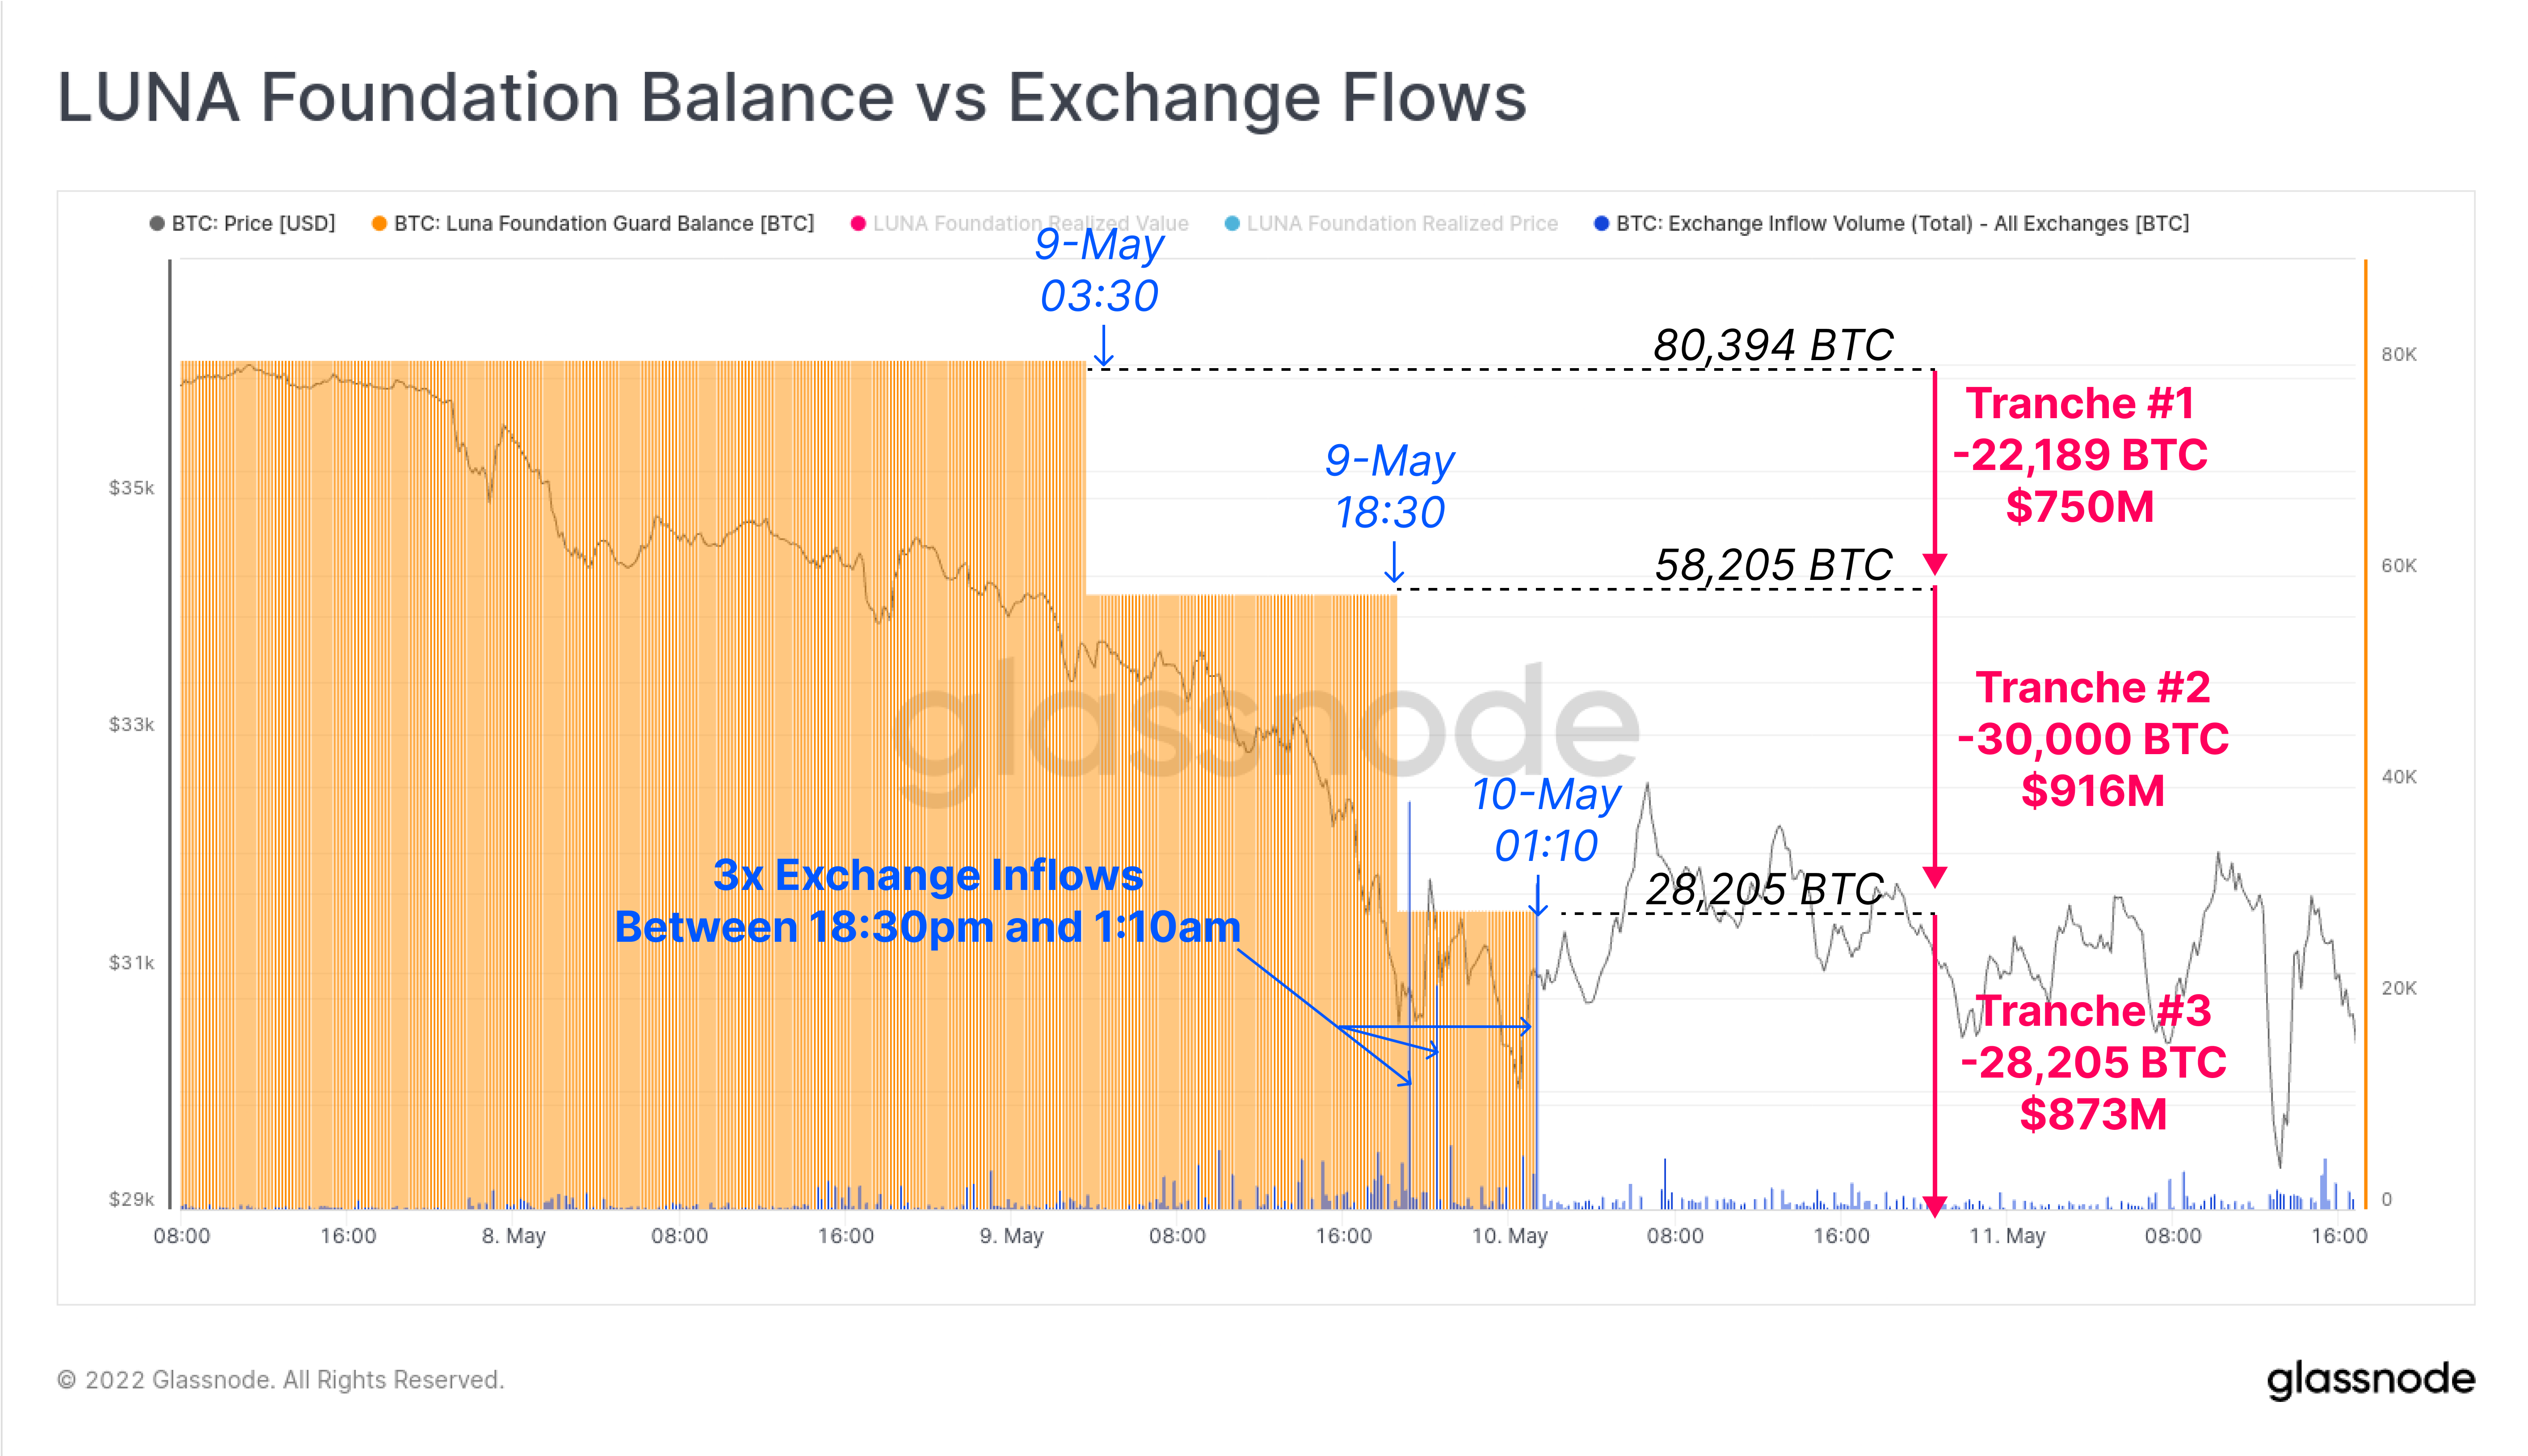 LUNA Foundation Balance vs Exchange Flows